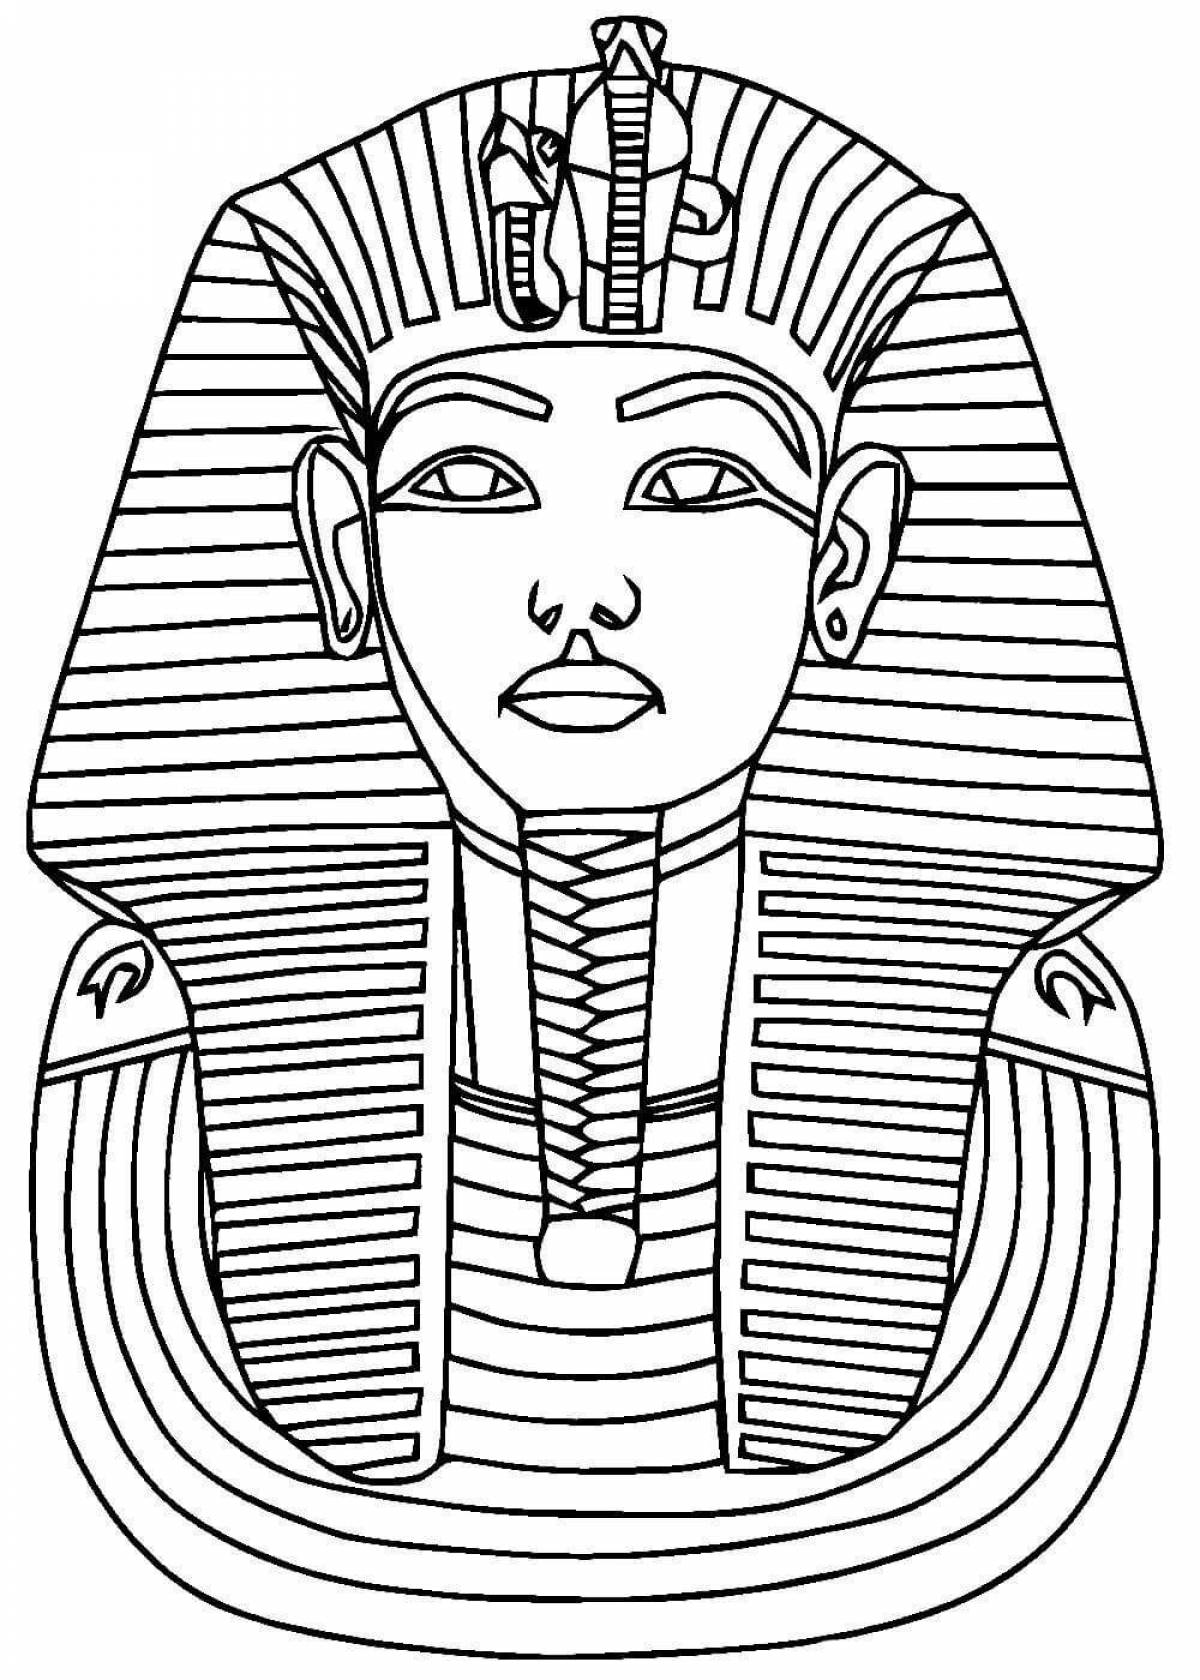 Mask of the pharaoh tutankhamen from class 5 #12